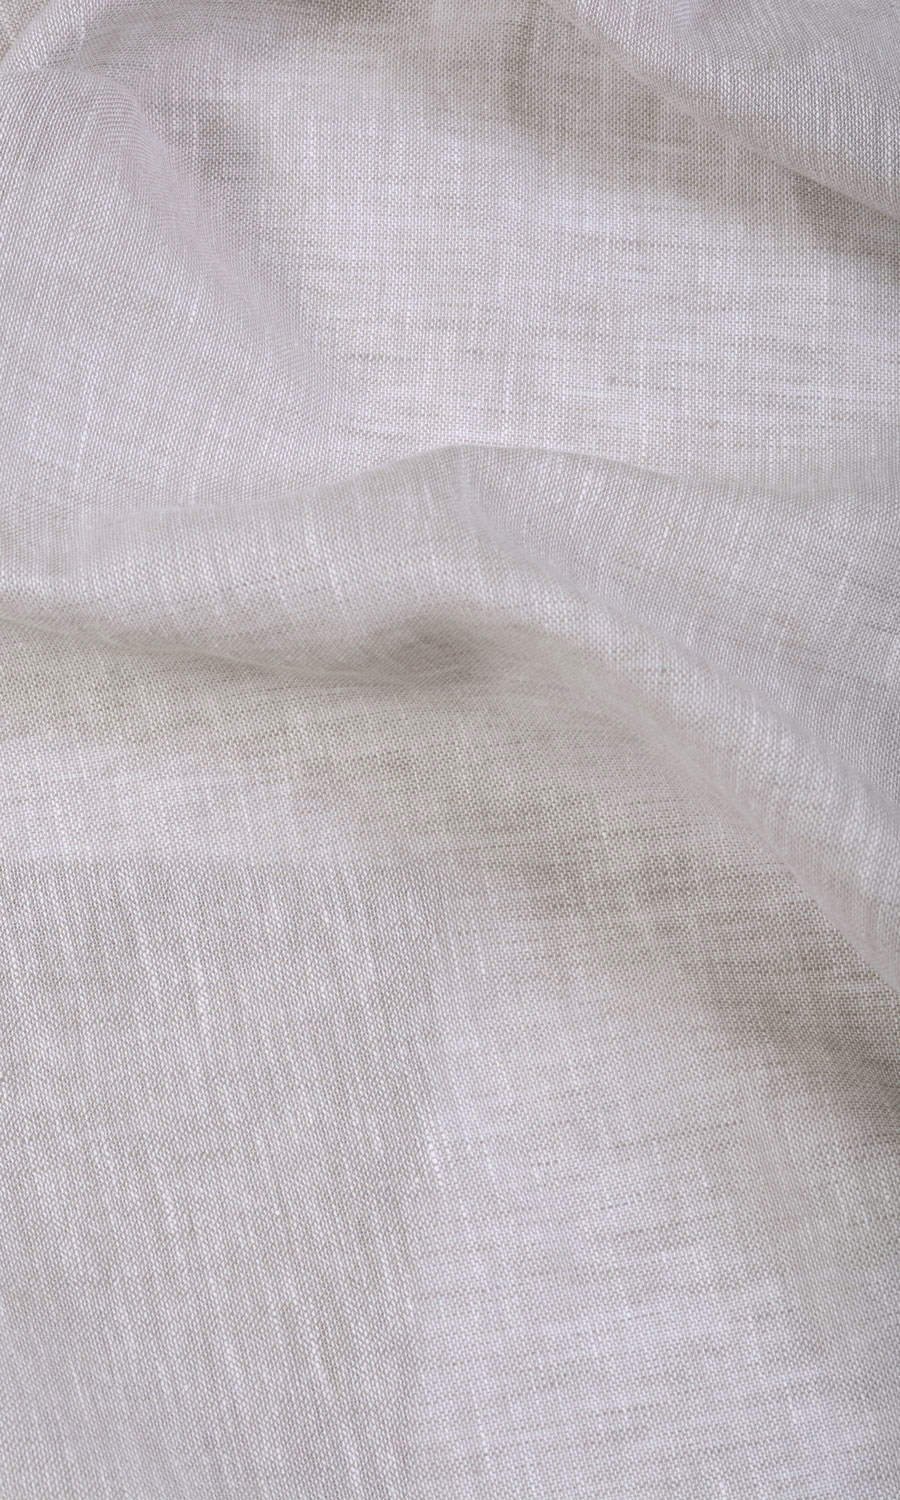 'Ena' Linen Sheer Window Curtains (Ash Gray/ Abalone Gray)